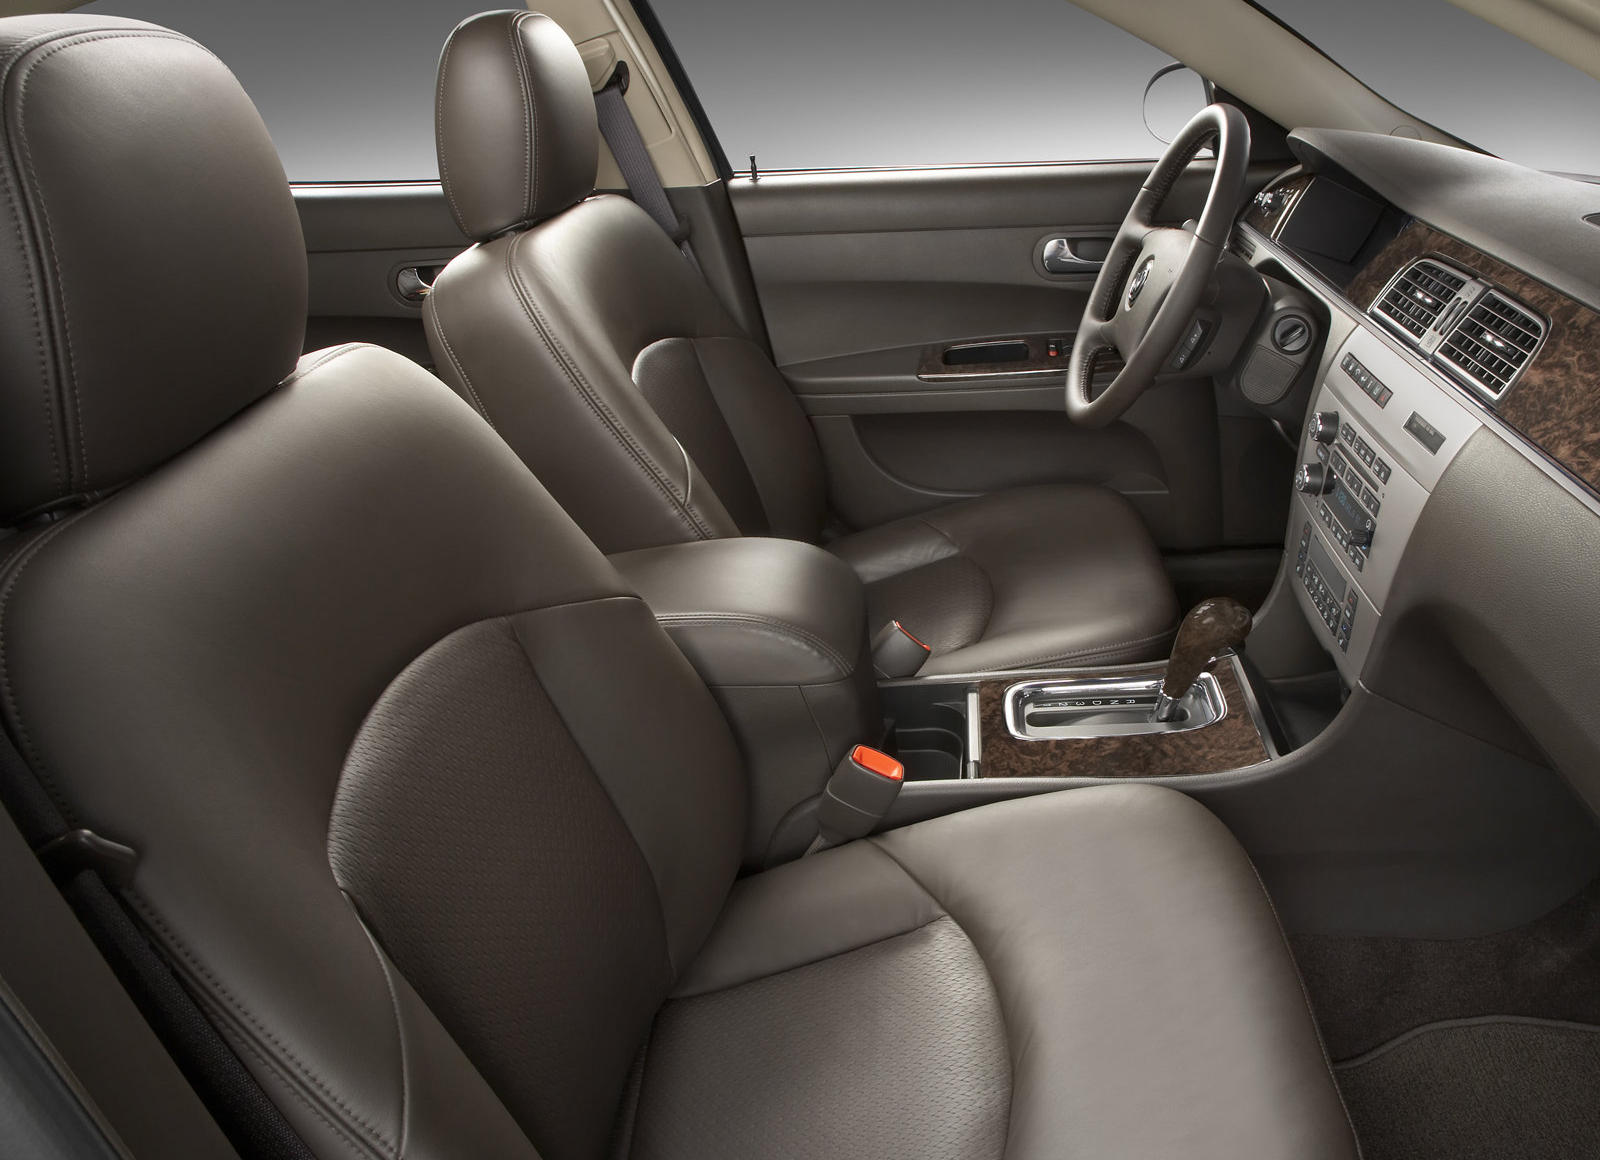 2009 Buick LaCrosse Interior Photos | CarBuzz